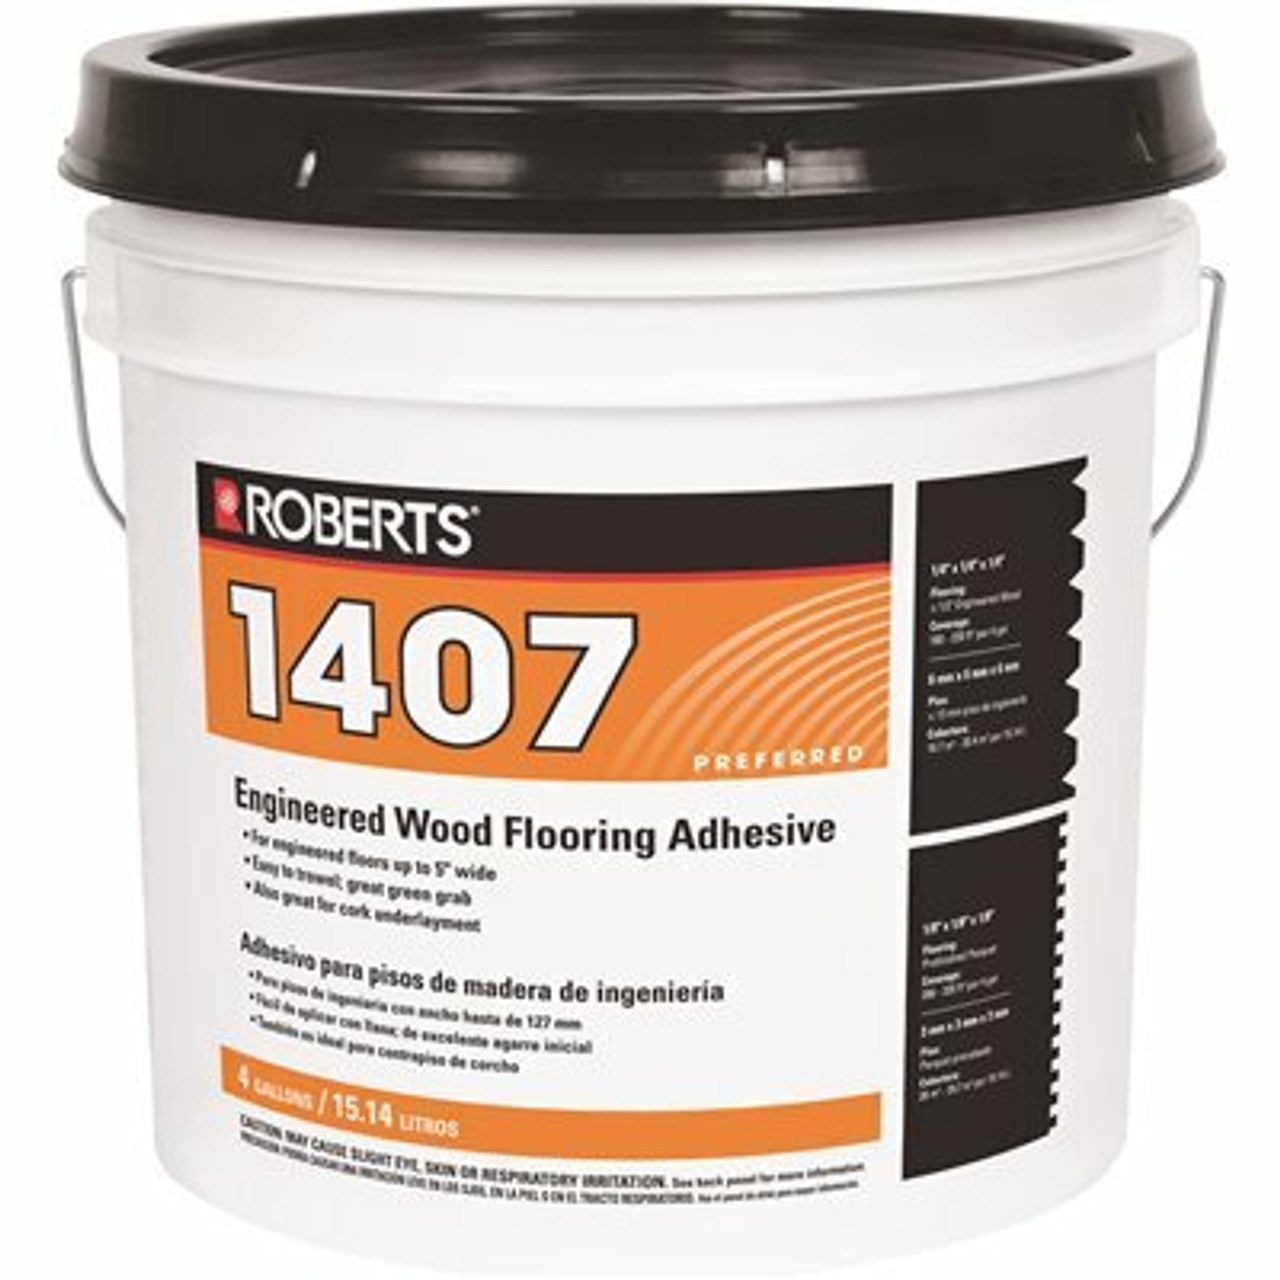 Roberts 1407 4 Gal. Engineered Wood Flooring Adhesive